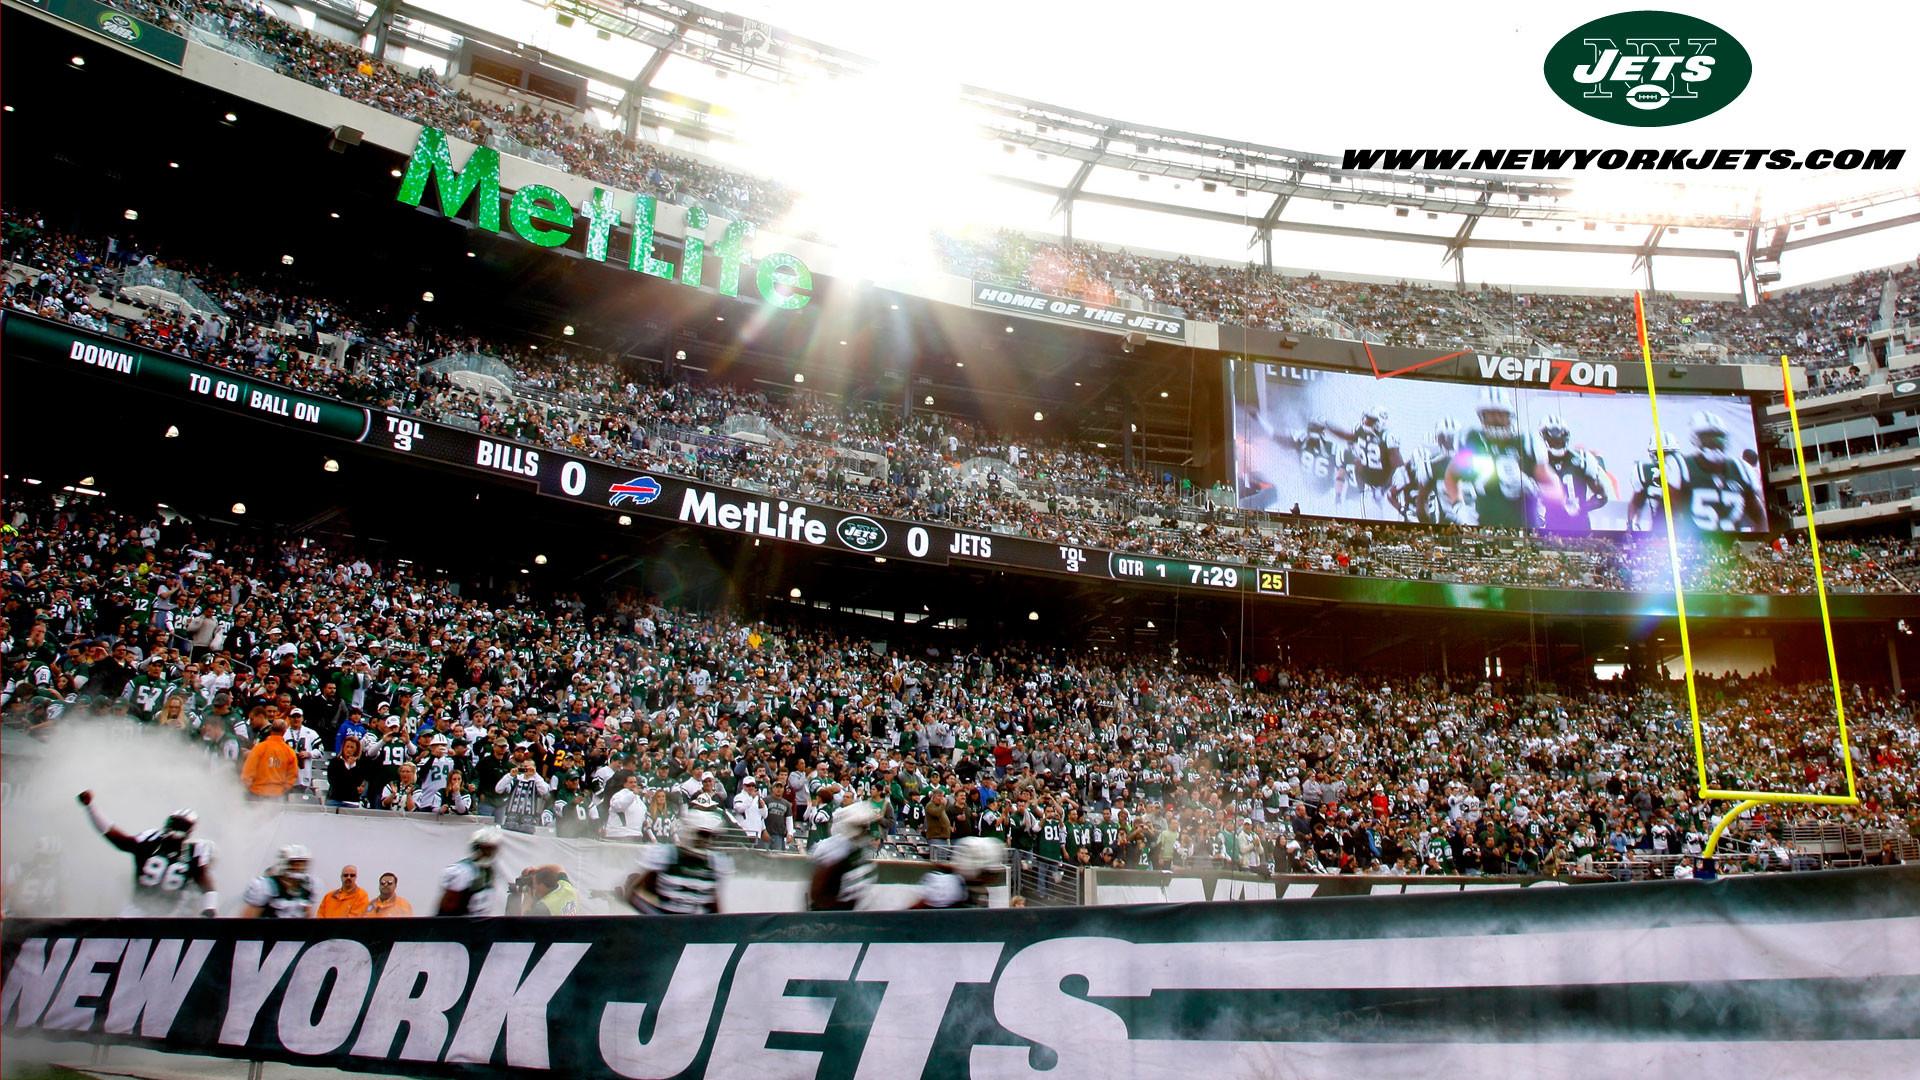 NY Jets Wallpaper and Screensaver